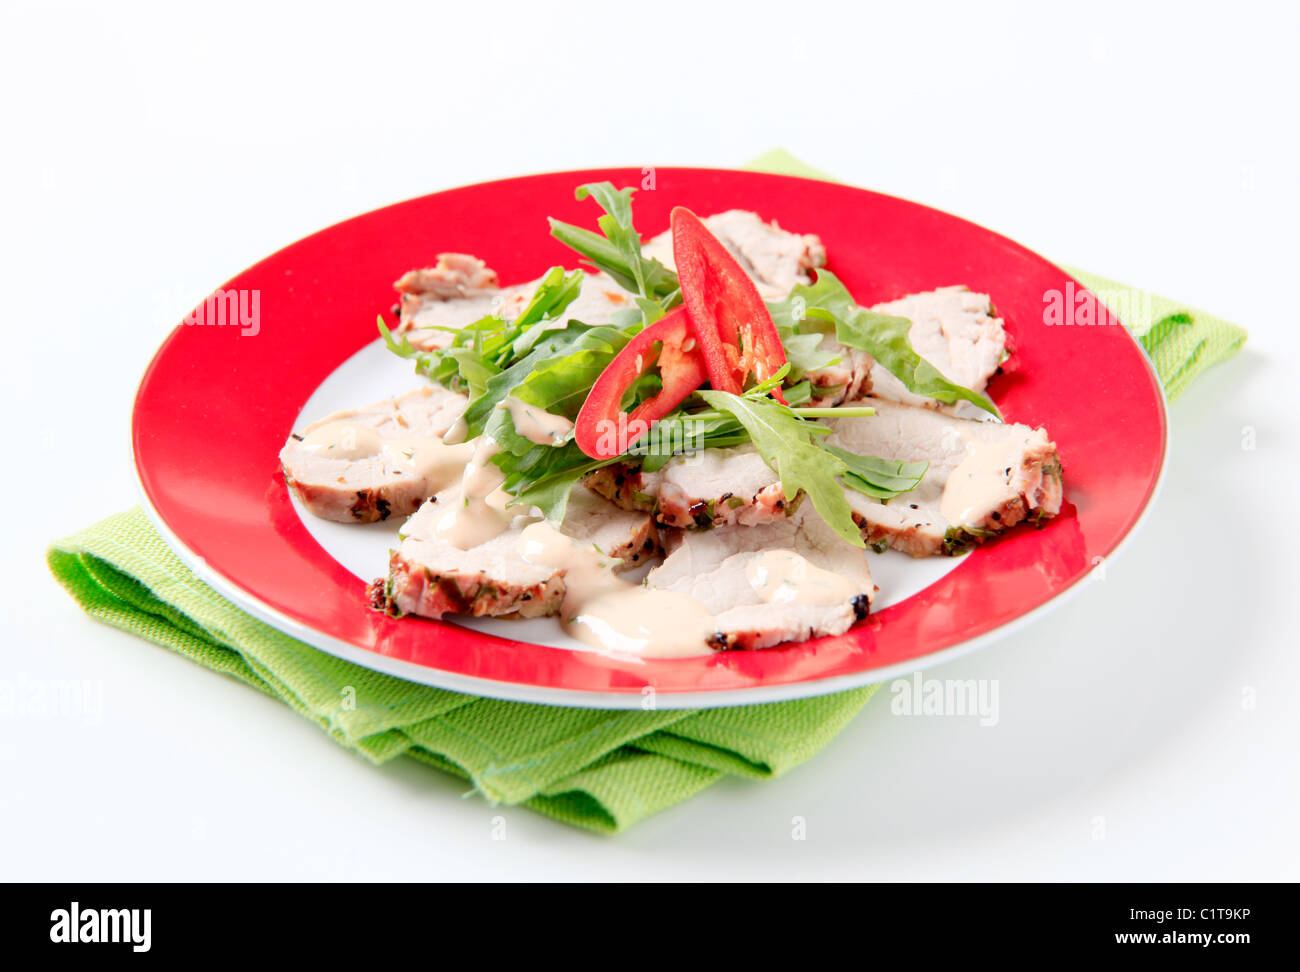 Roast pork tenderloin with greens and dressing Stock Photo